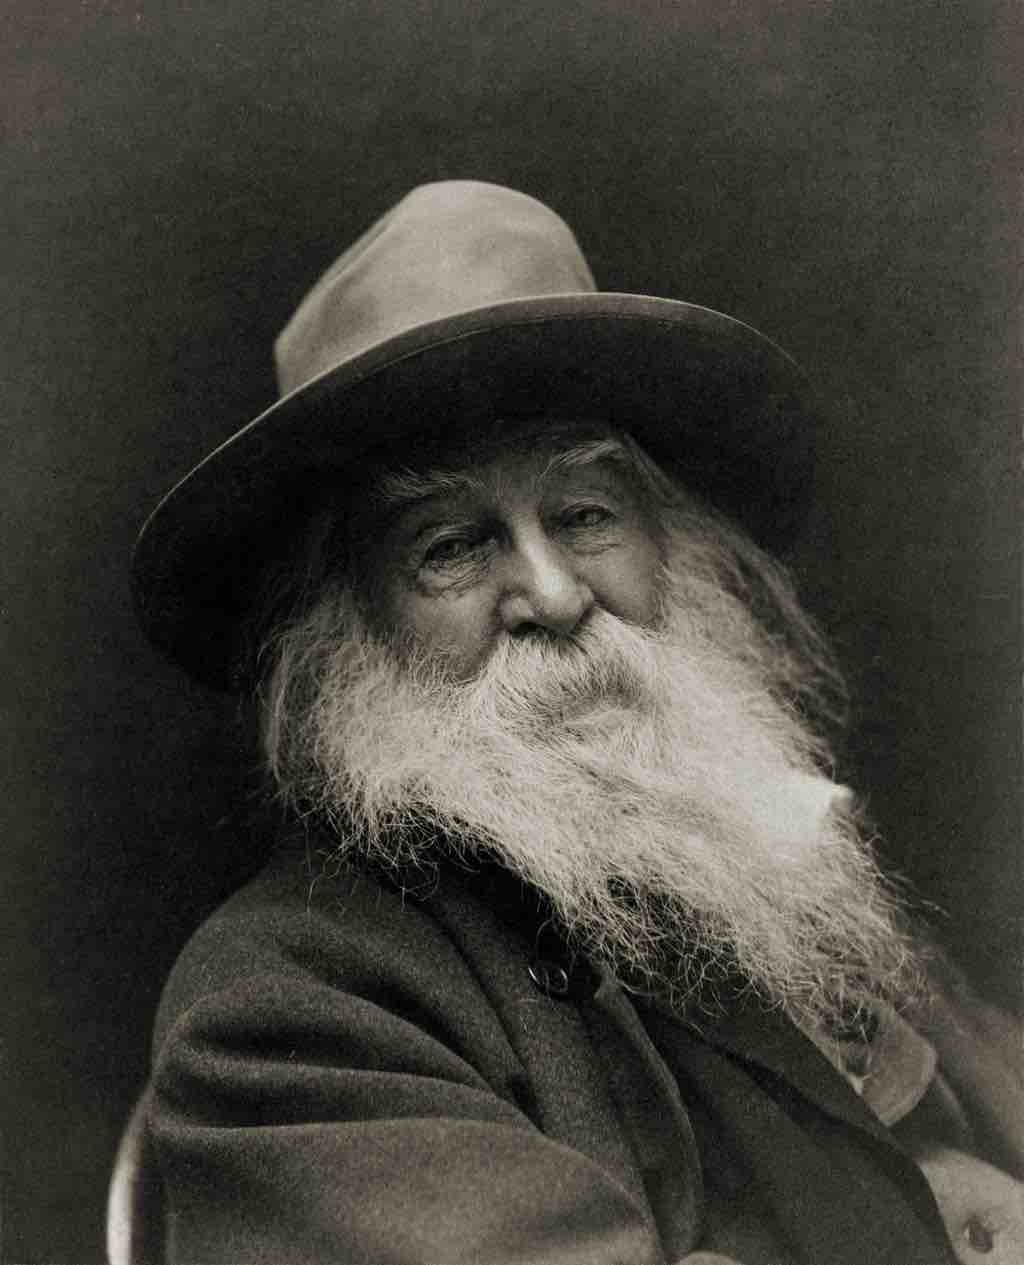 Walt Whitman, American poet and essayist